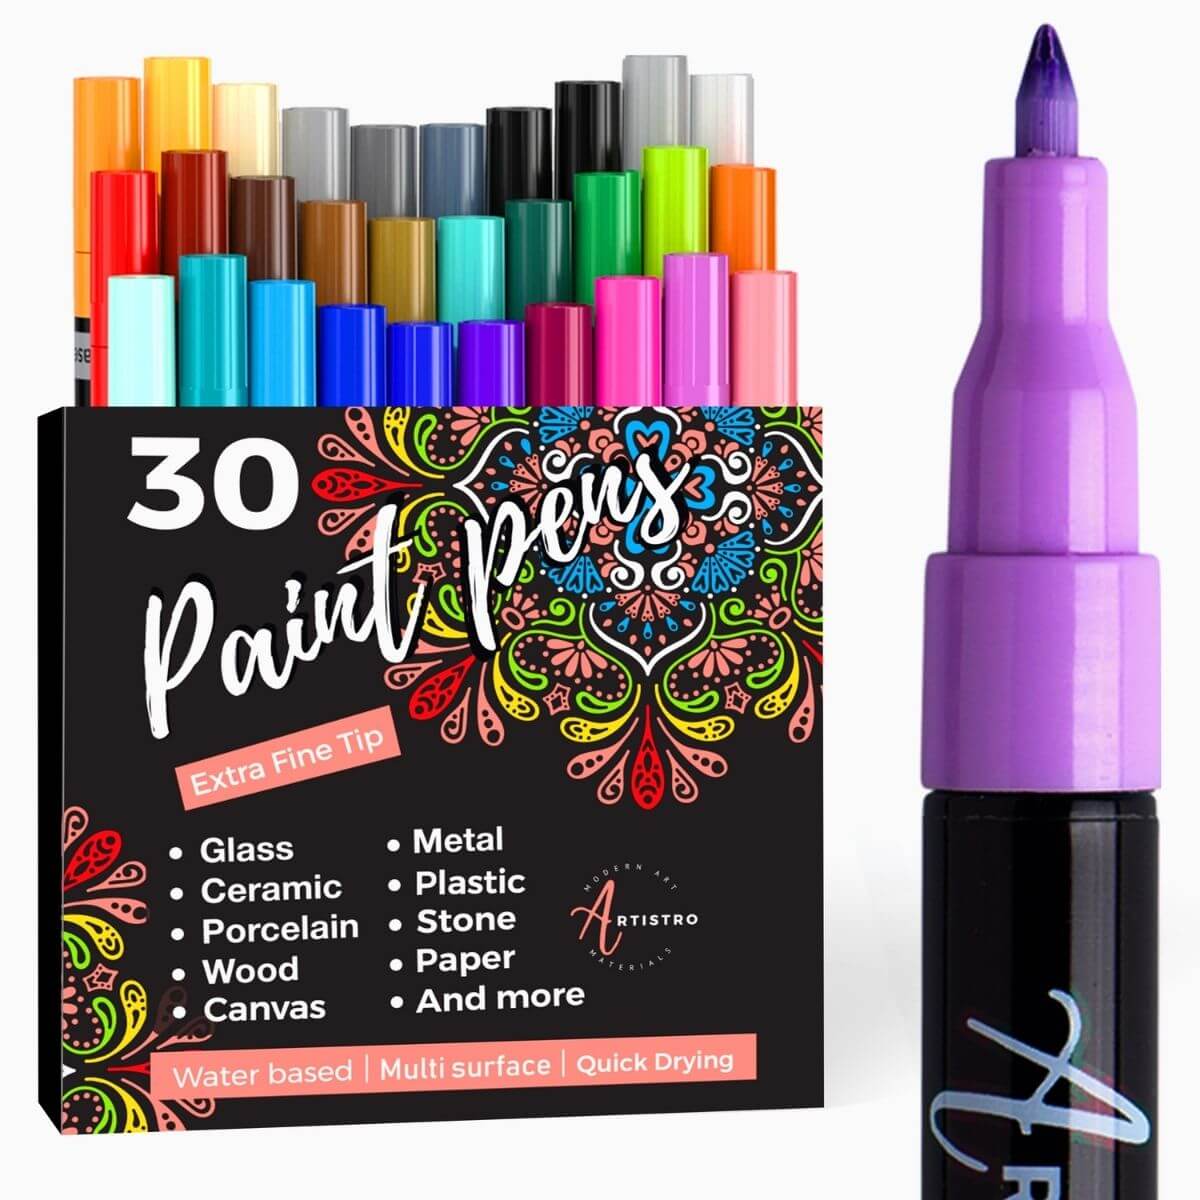 60 Acrylic + 15 Oil Based paint pen pack